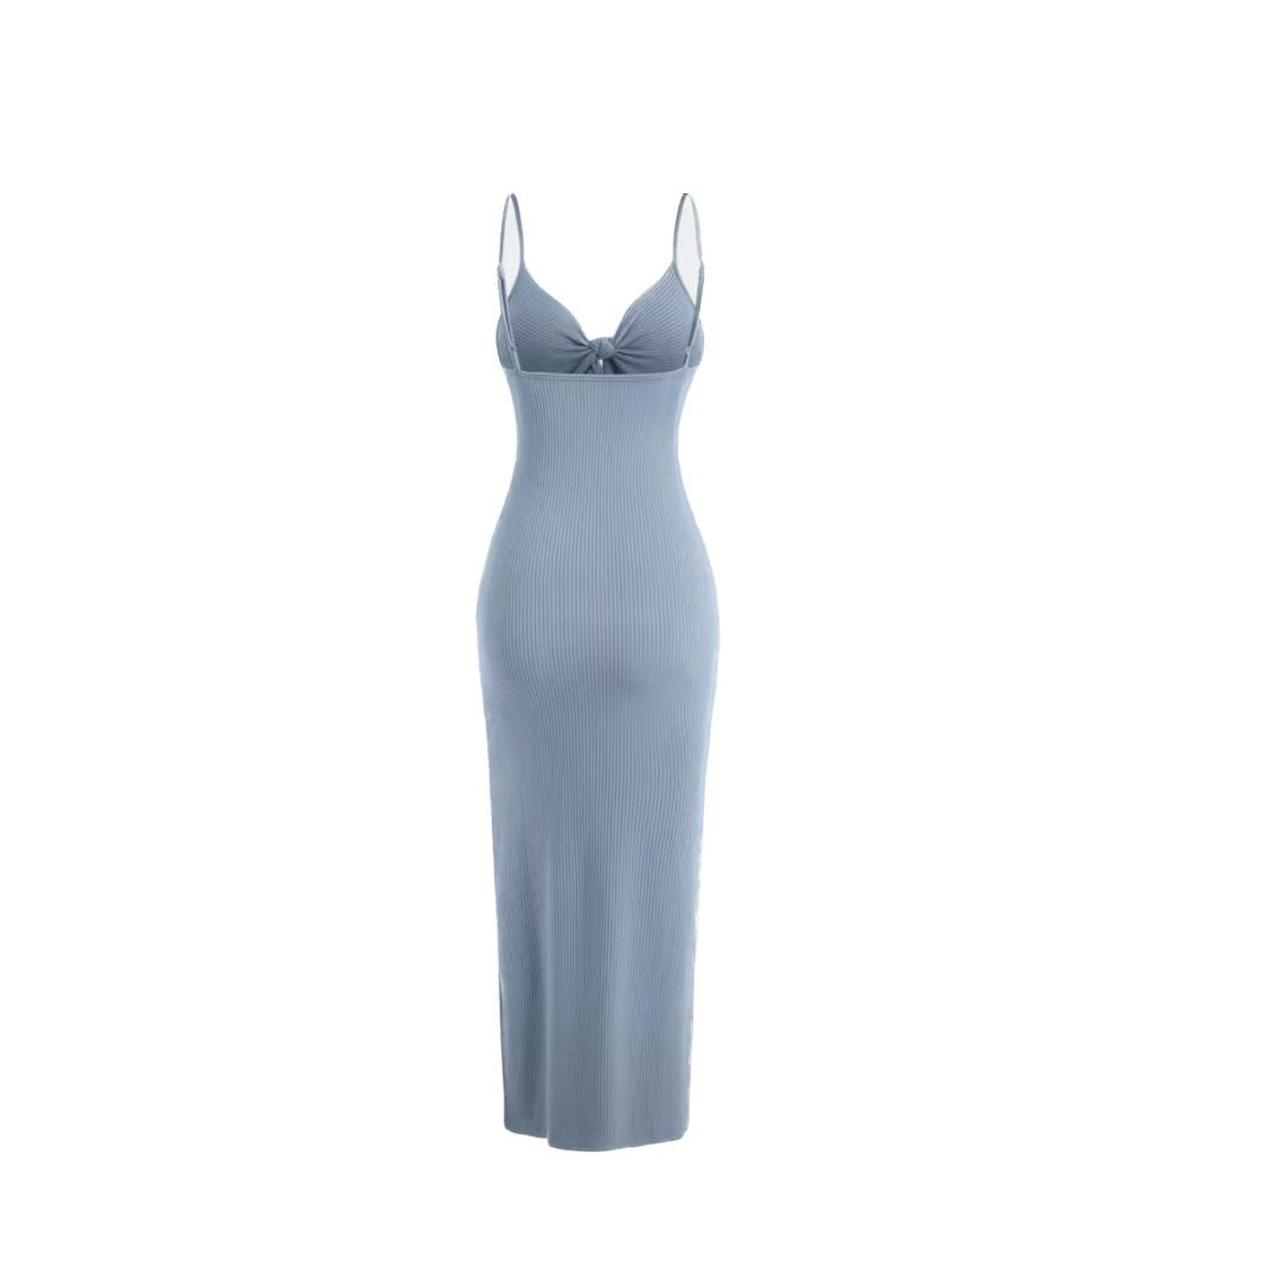 Femme Luxe Women's Blue Dress (2)